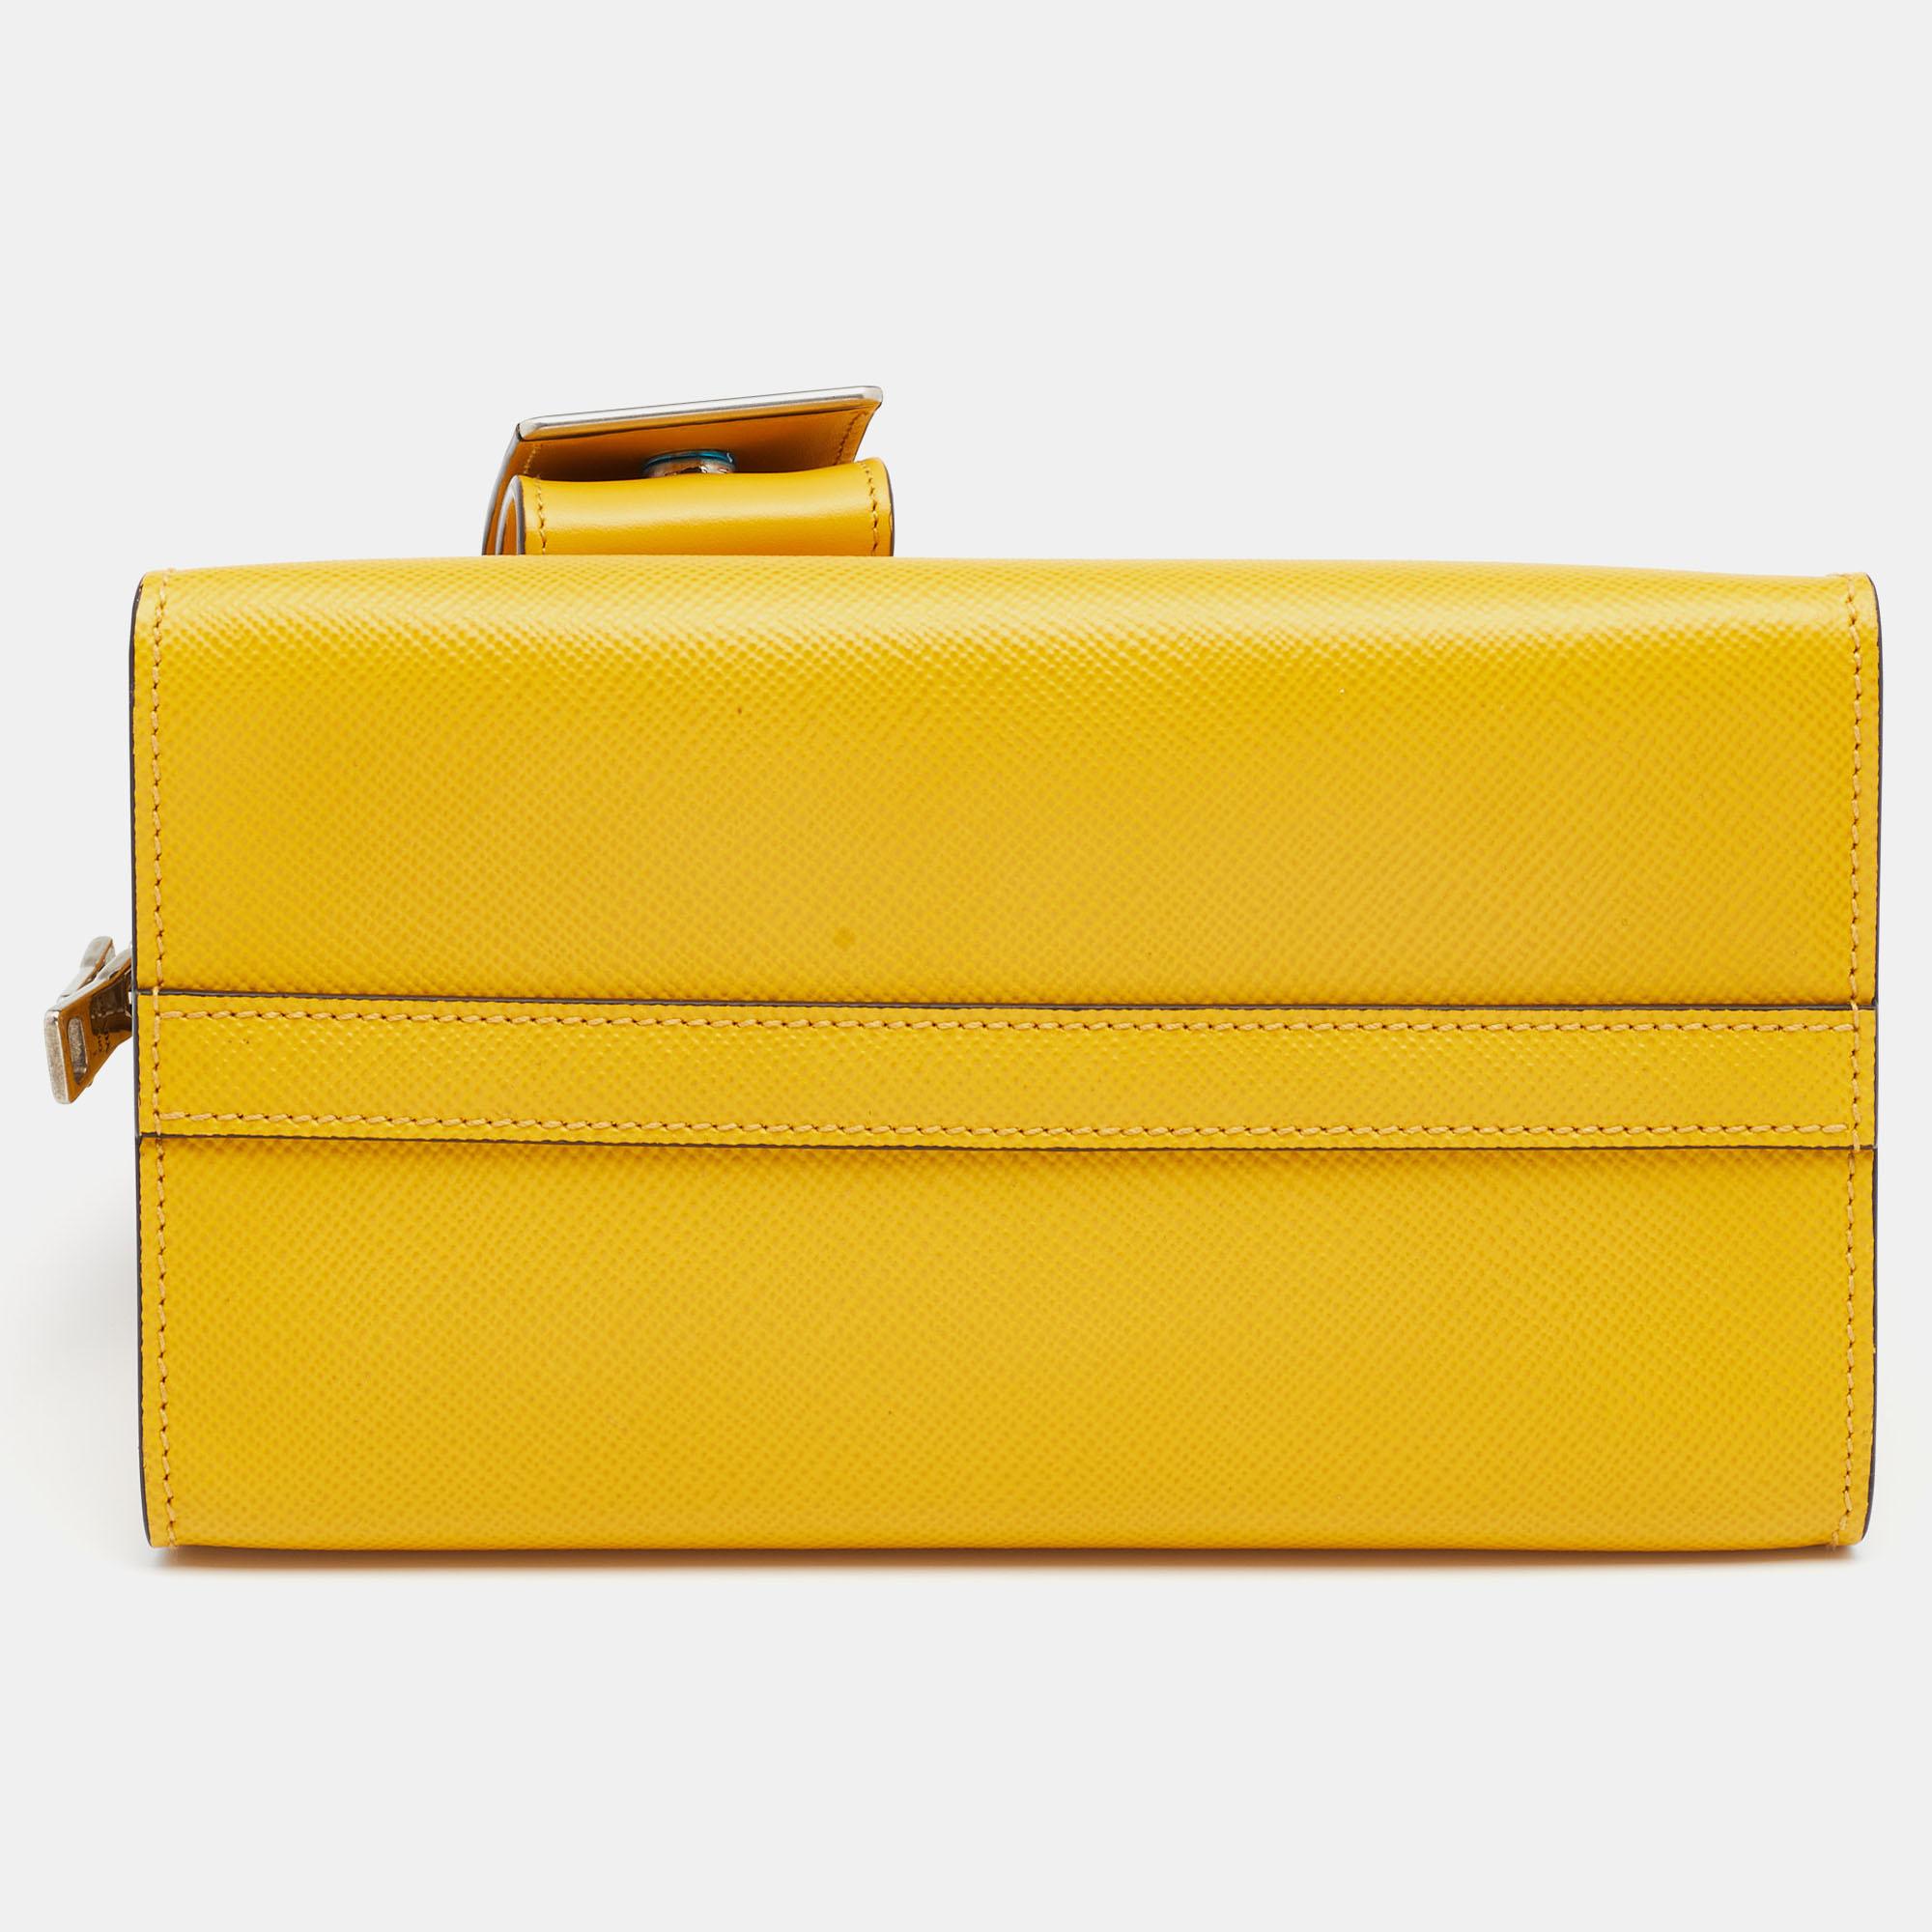 Prada Yellow Saffiano Cuir Leather Monochrome Satchel 3